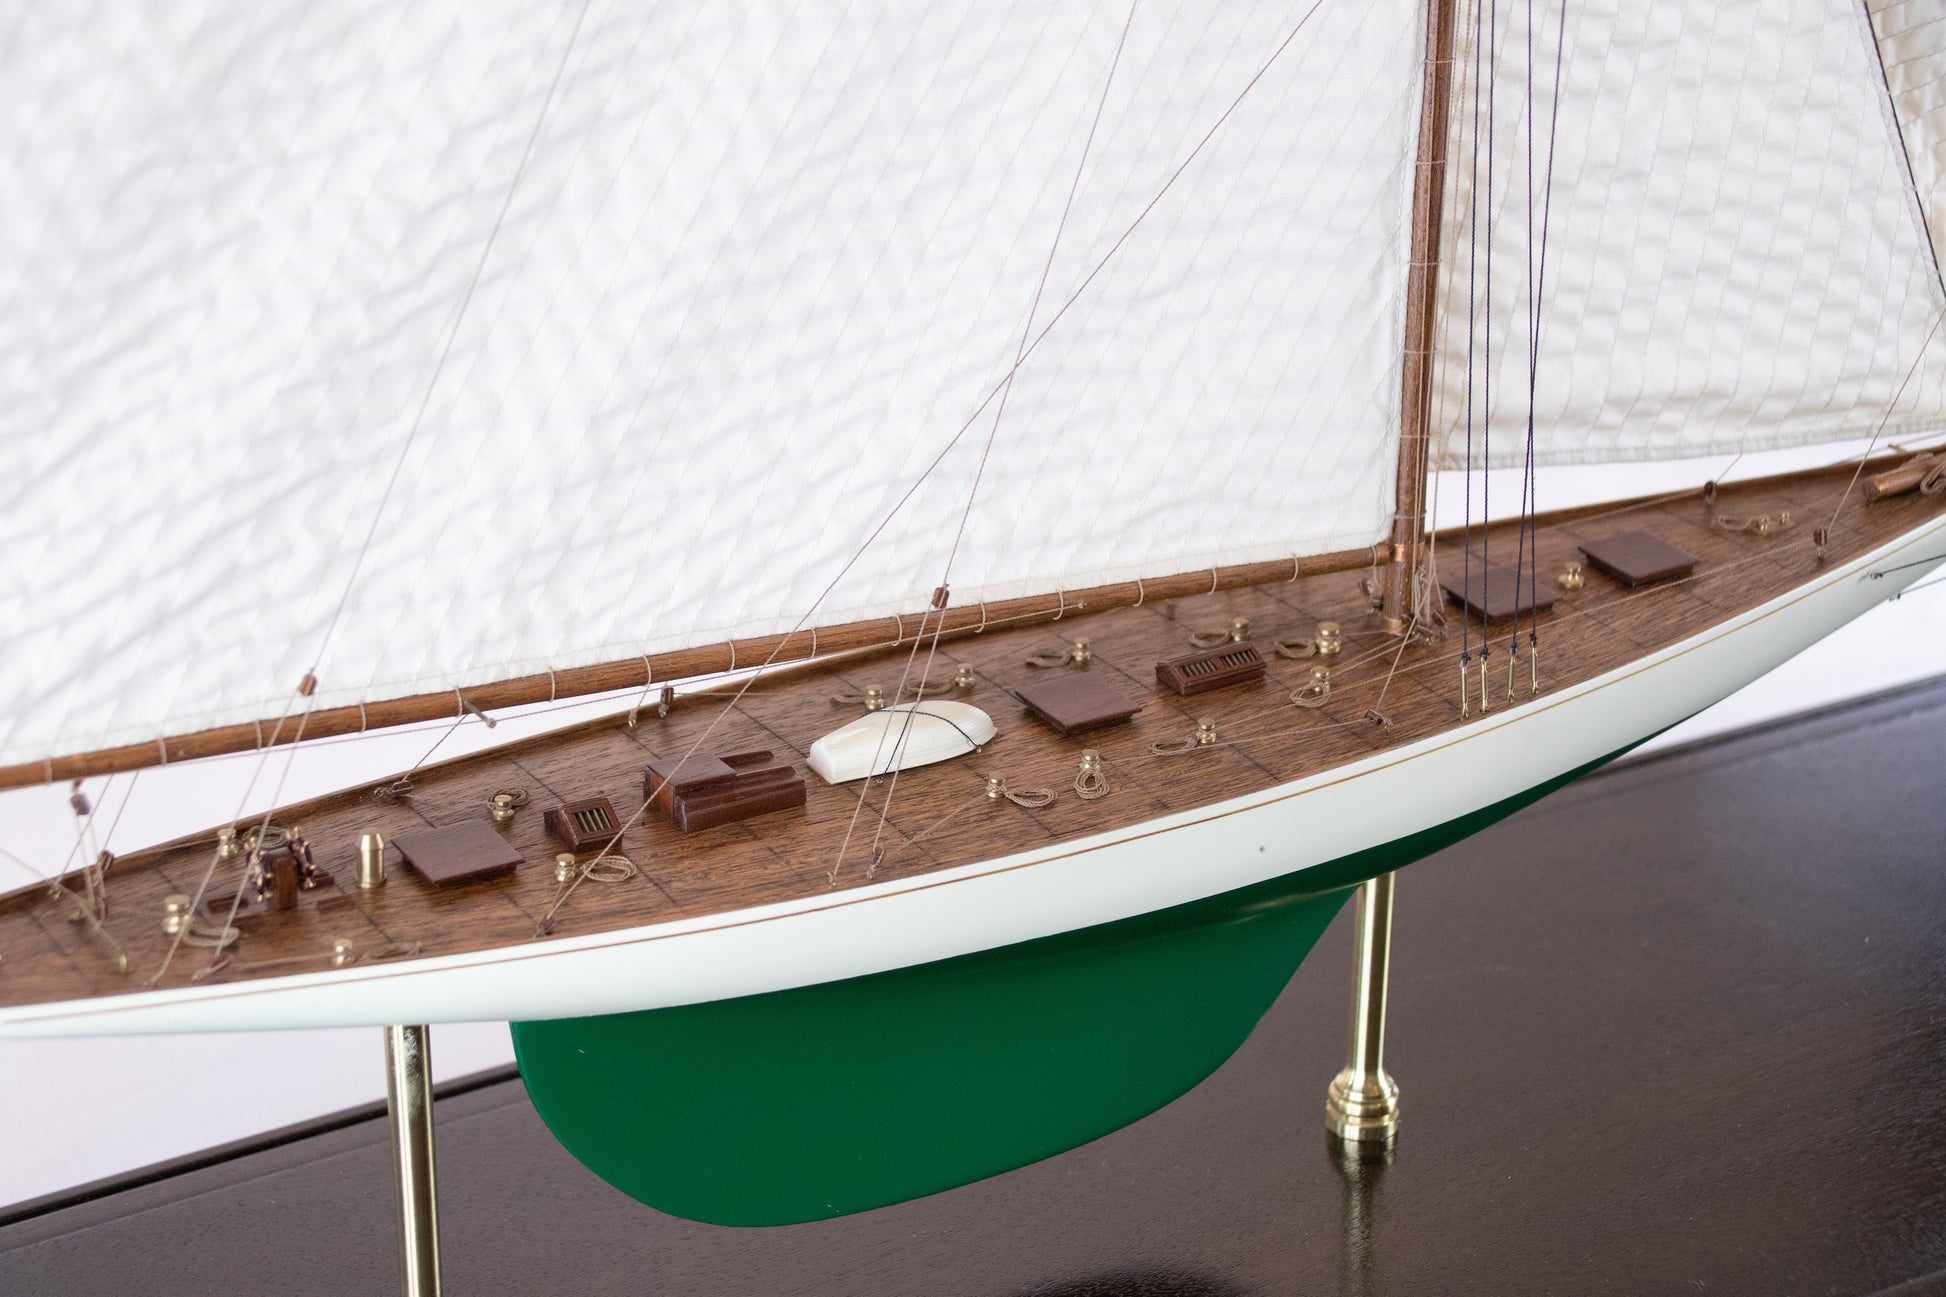 America's Cup Yacht "Defender" of 1895 - Lannan Gallery